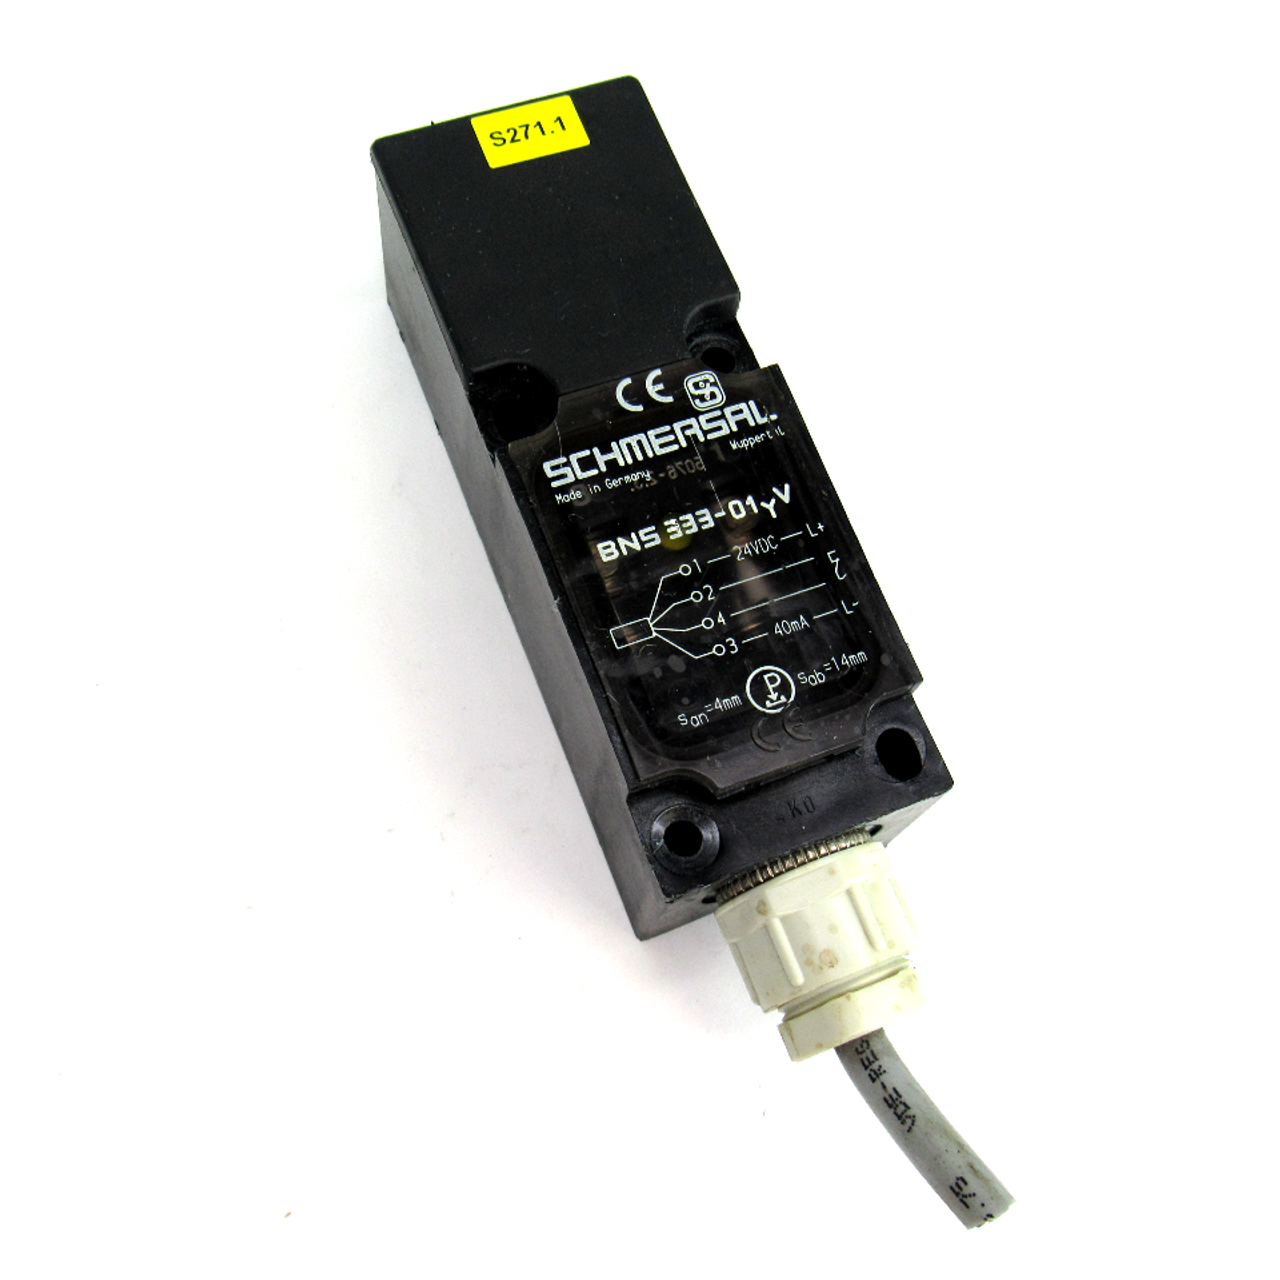 Schmersal BNS 333-01YV Safety Switch Magnetic Sensor, 24V DC, 40mA